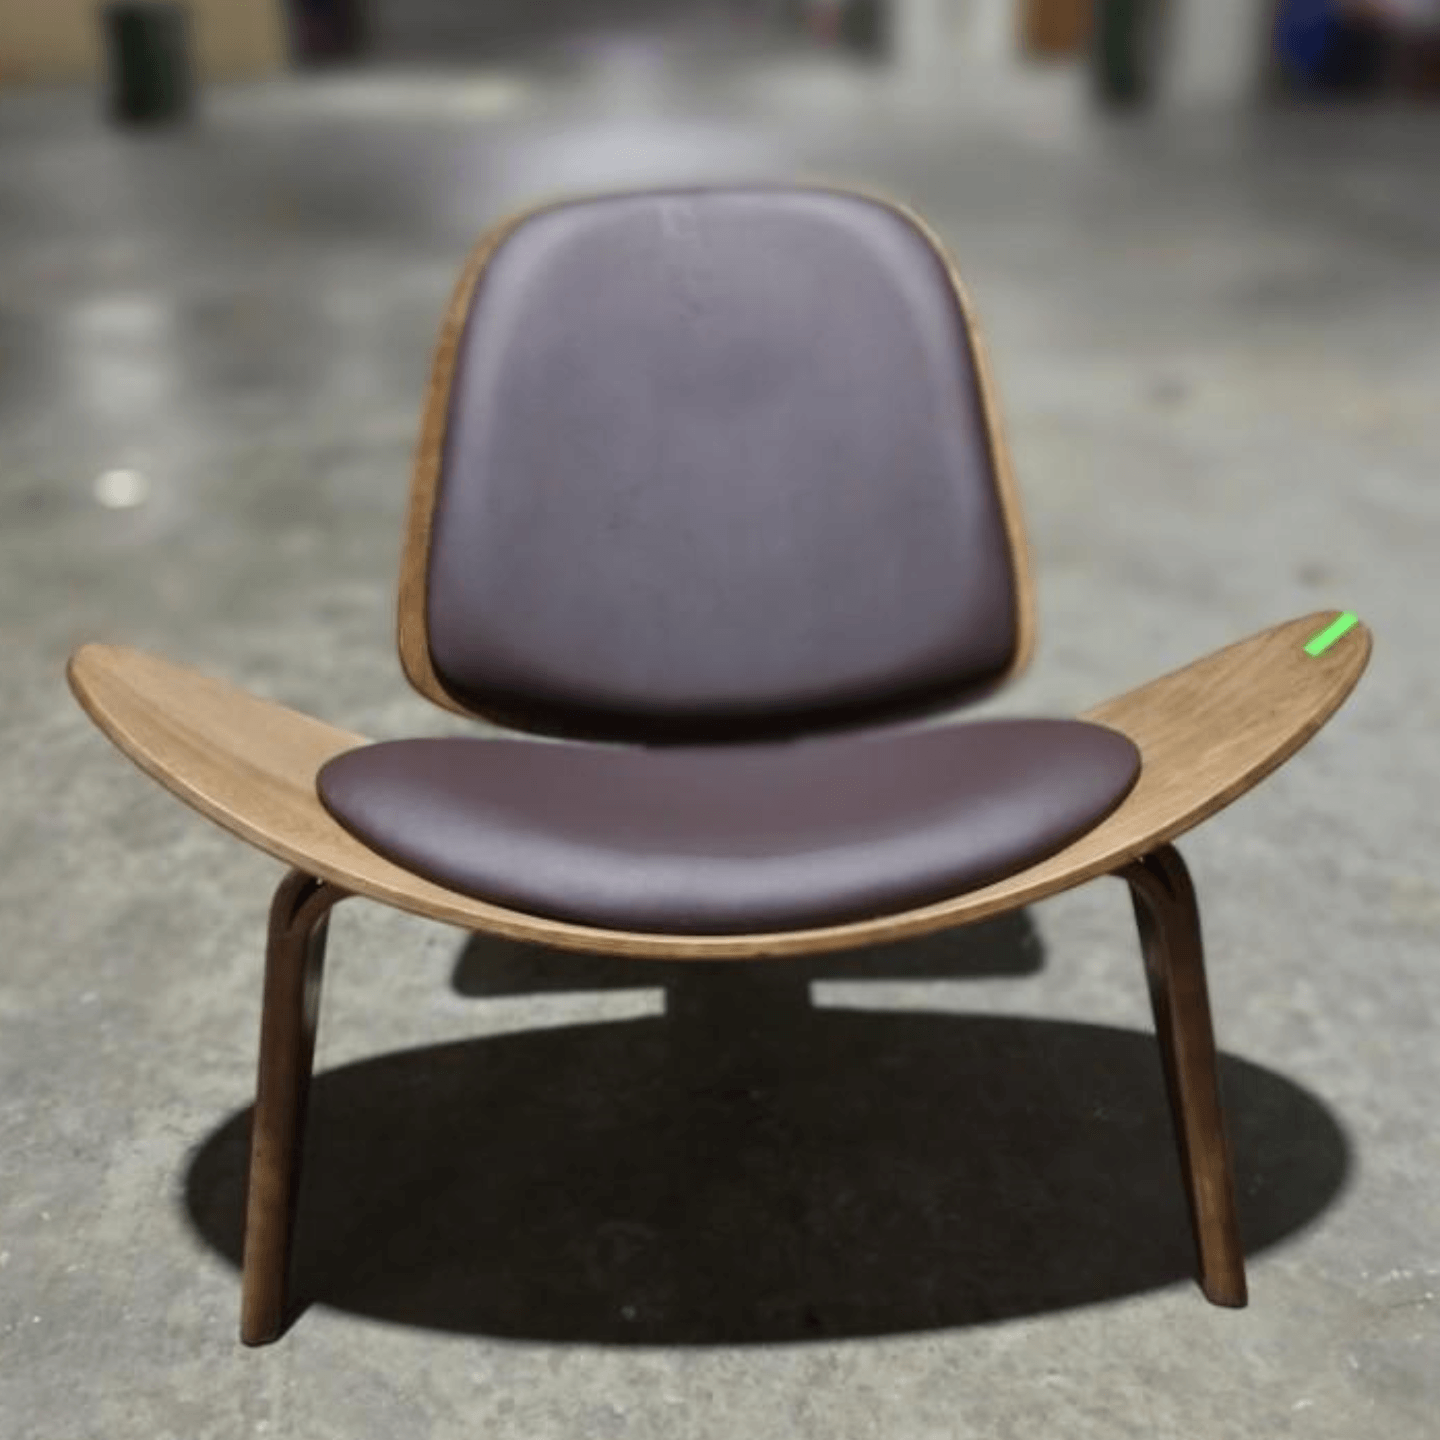 KAKTEN Chair in BROWN